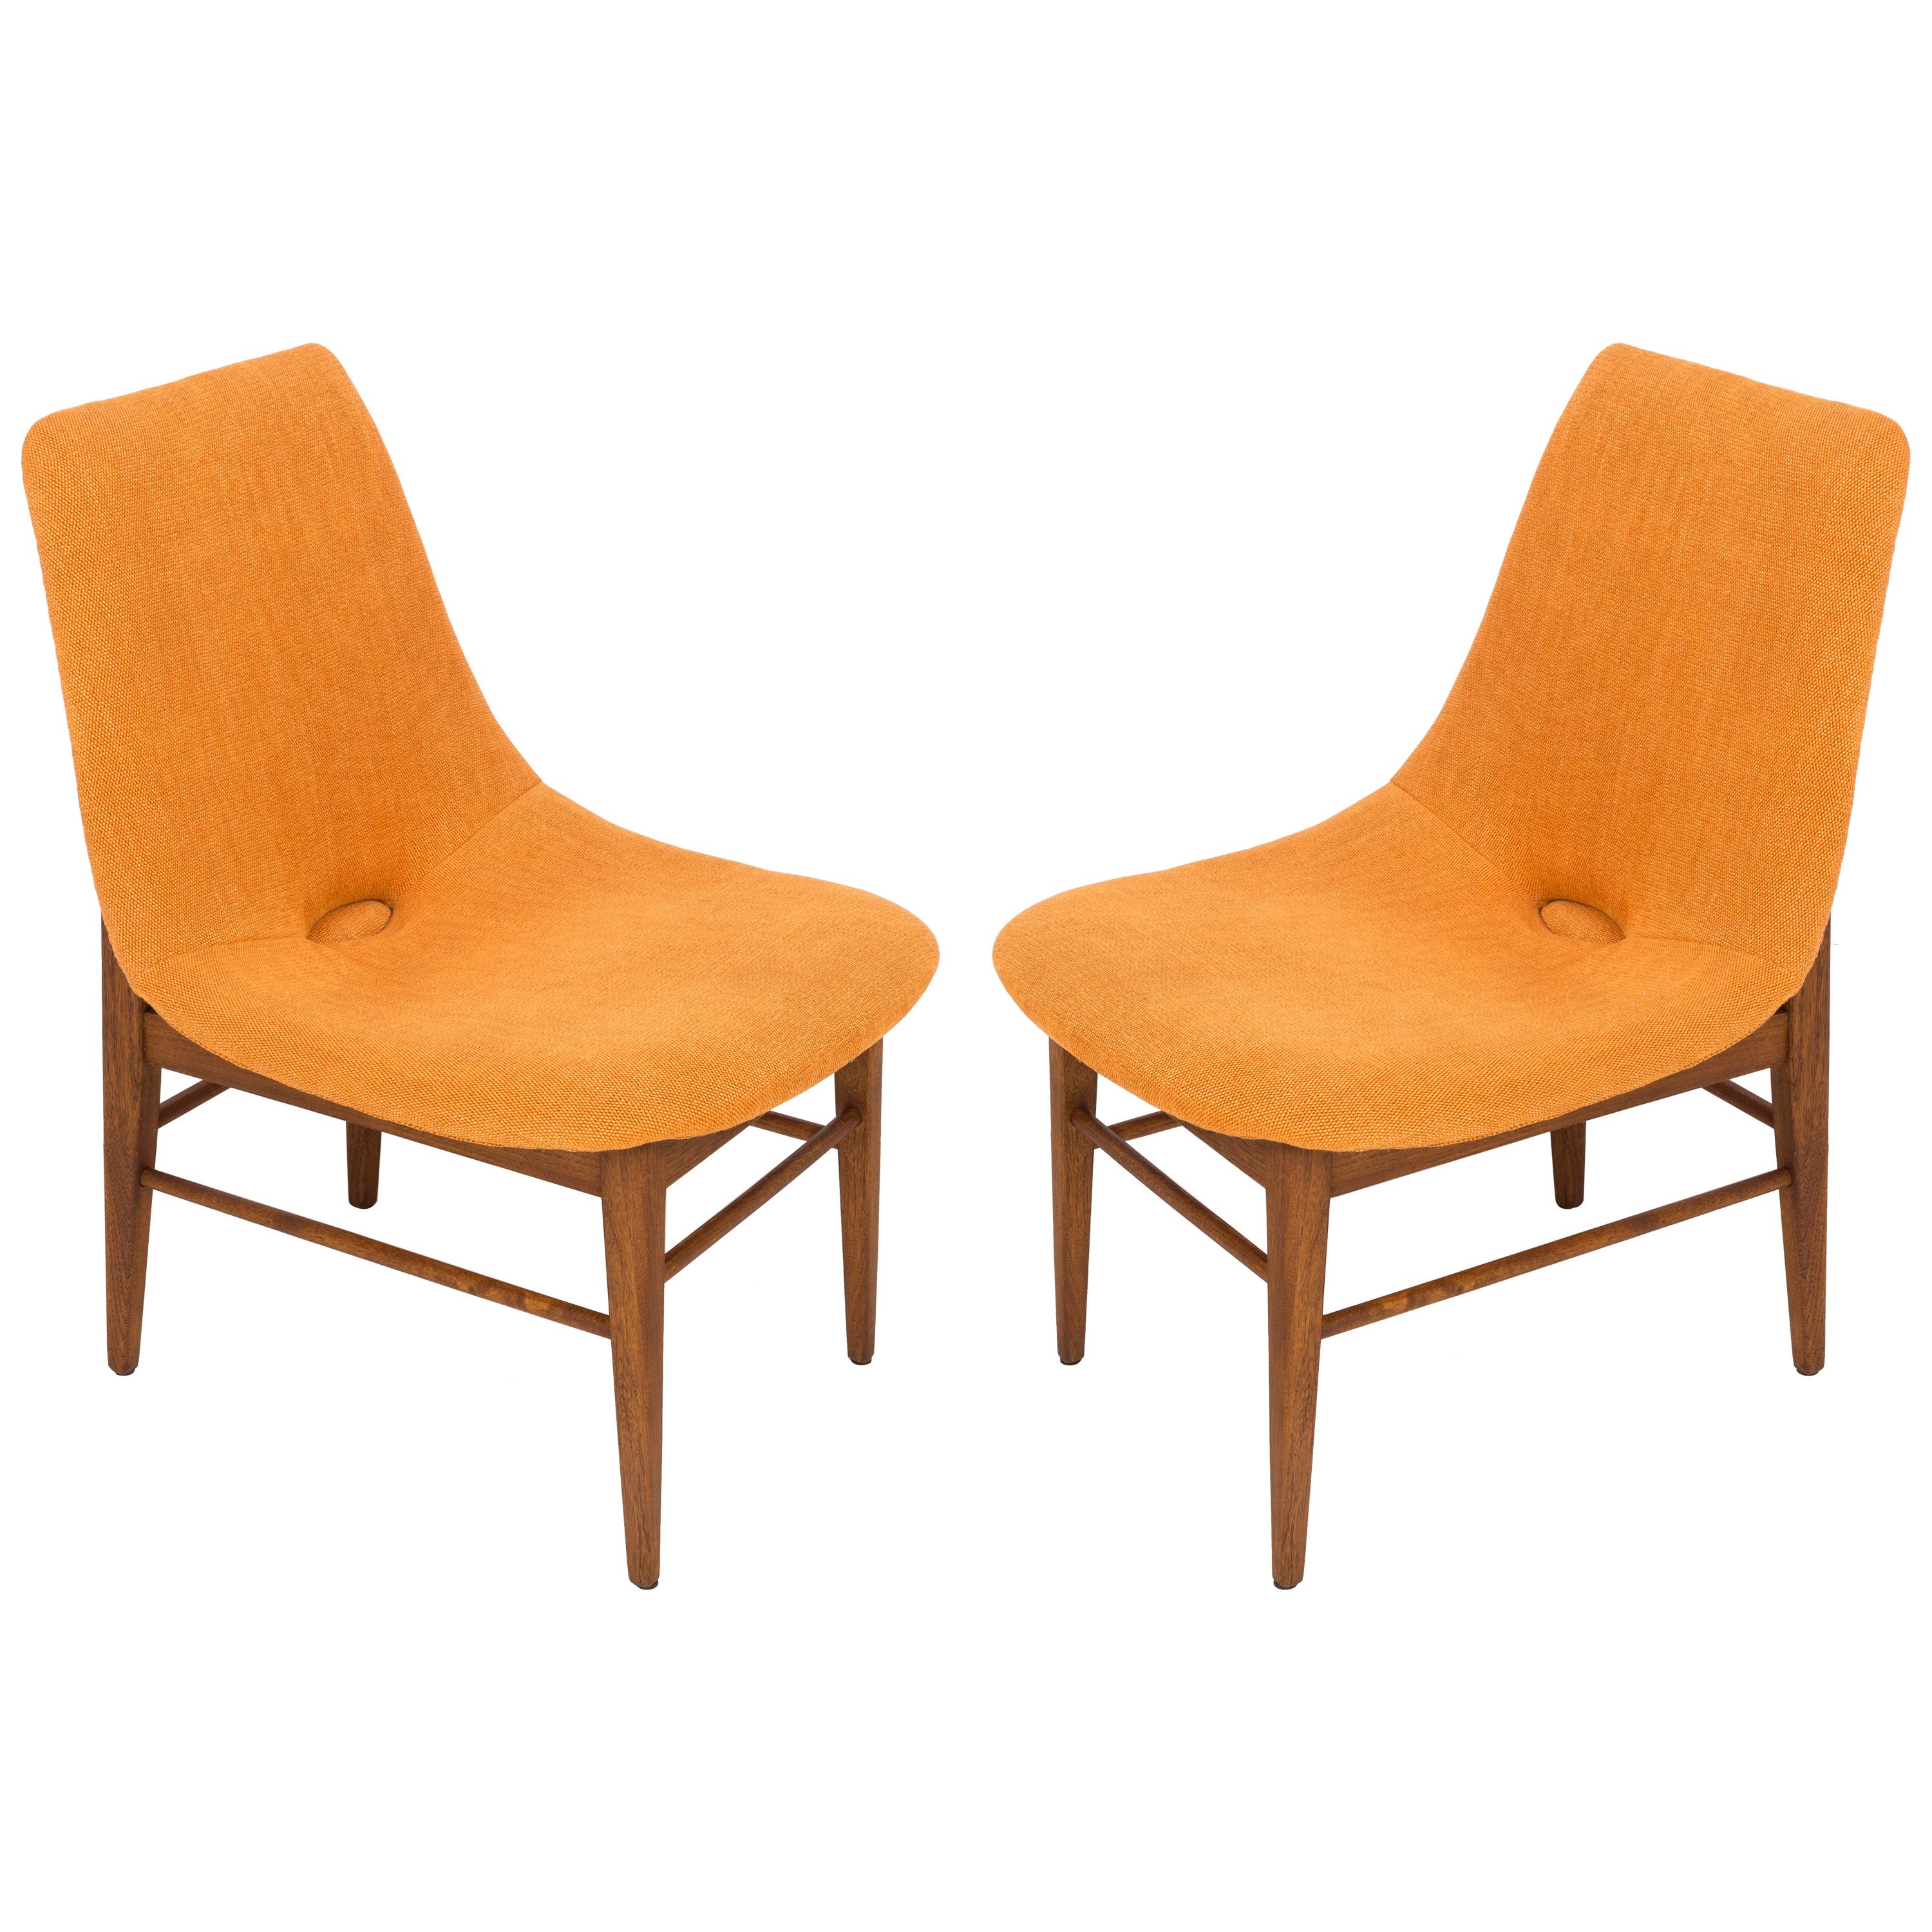 Set of Two Rare 20th Century Orange Shell Chairs, H. Lachert, 1960s